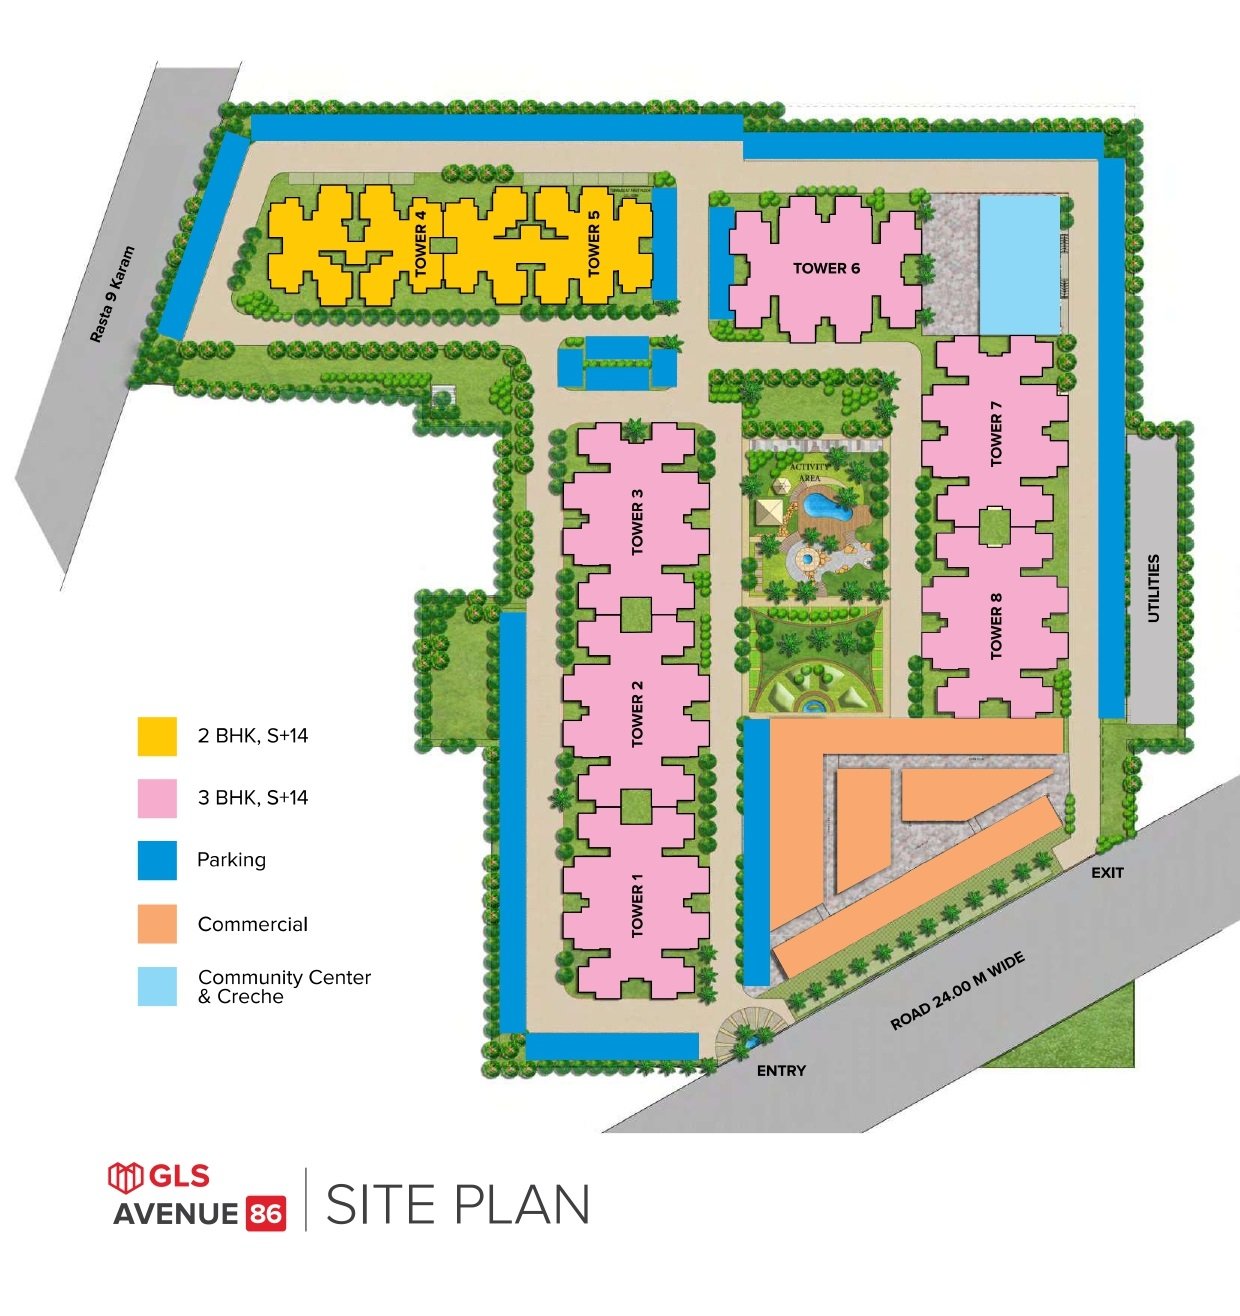 GLS Avenue 86 Site Plan